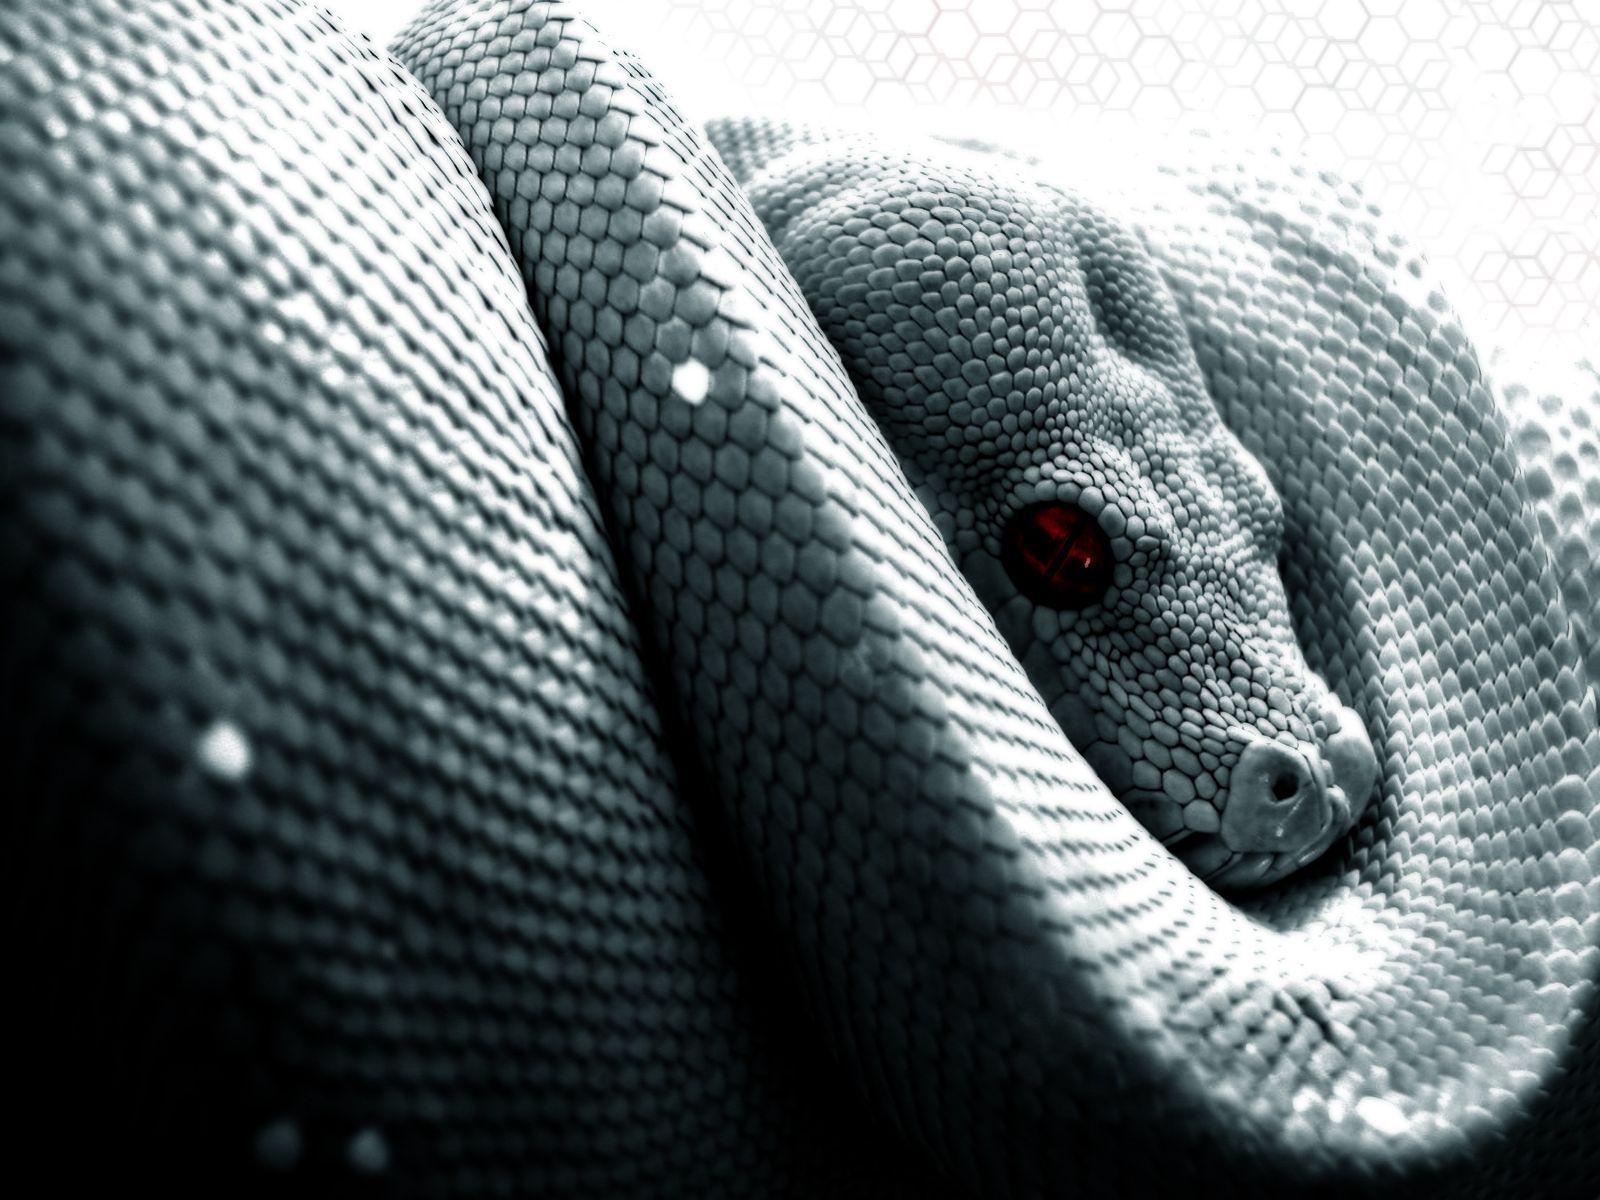 Snake Computer Wallpaper, Desktop Background 1600x1200 Id: 26823